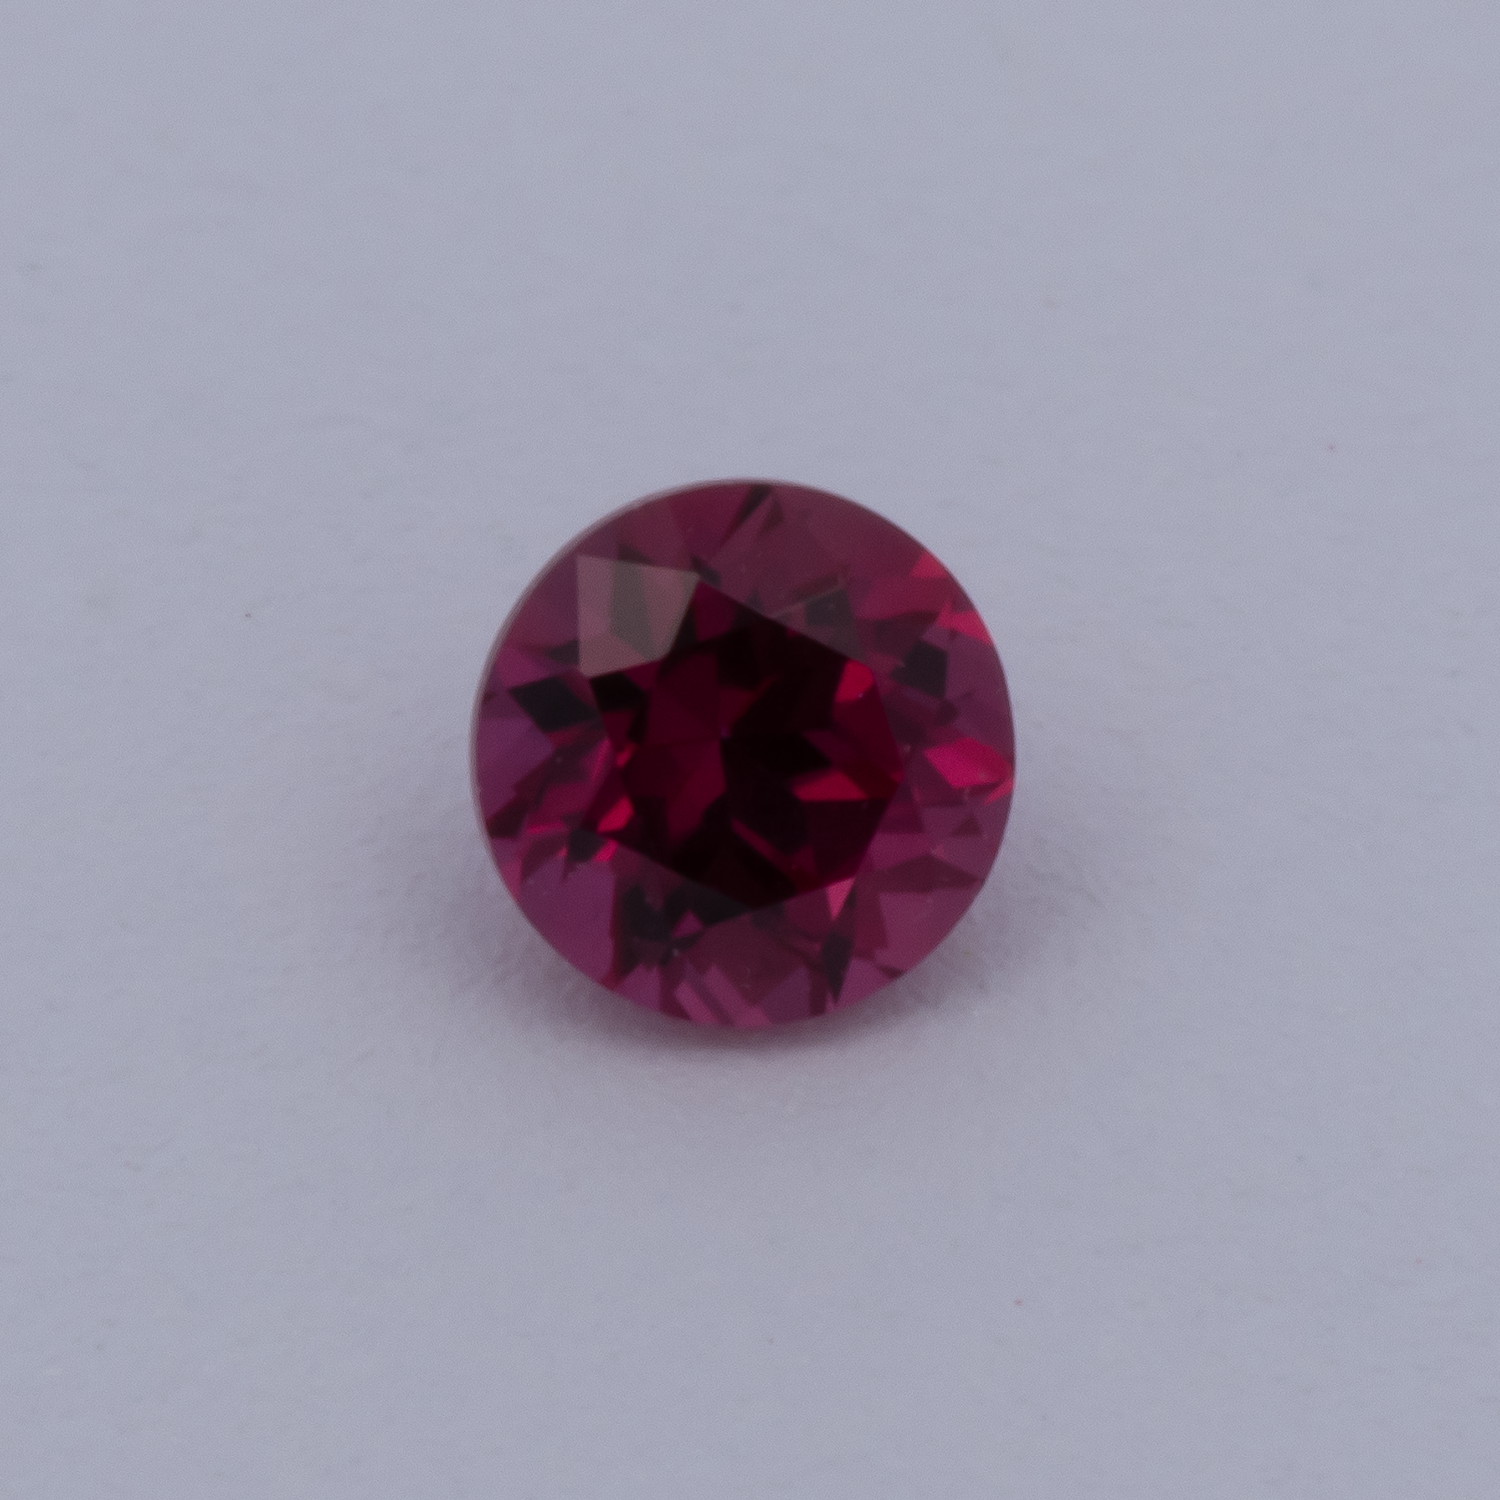 Rubin - rot, rund, 2.5x2.5 mm, 0.10 cts, Nr. RY10004